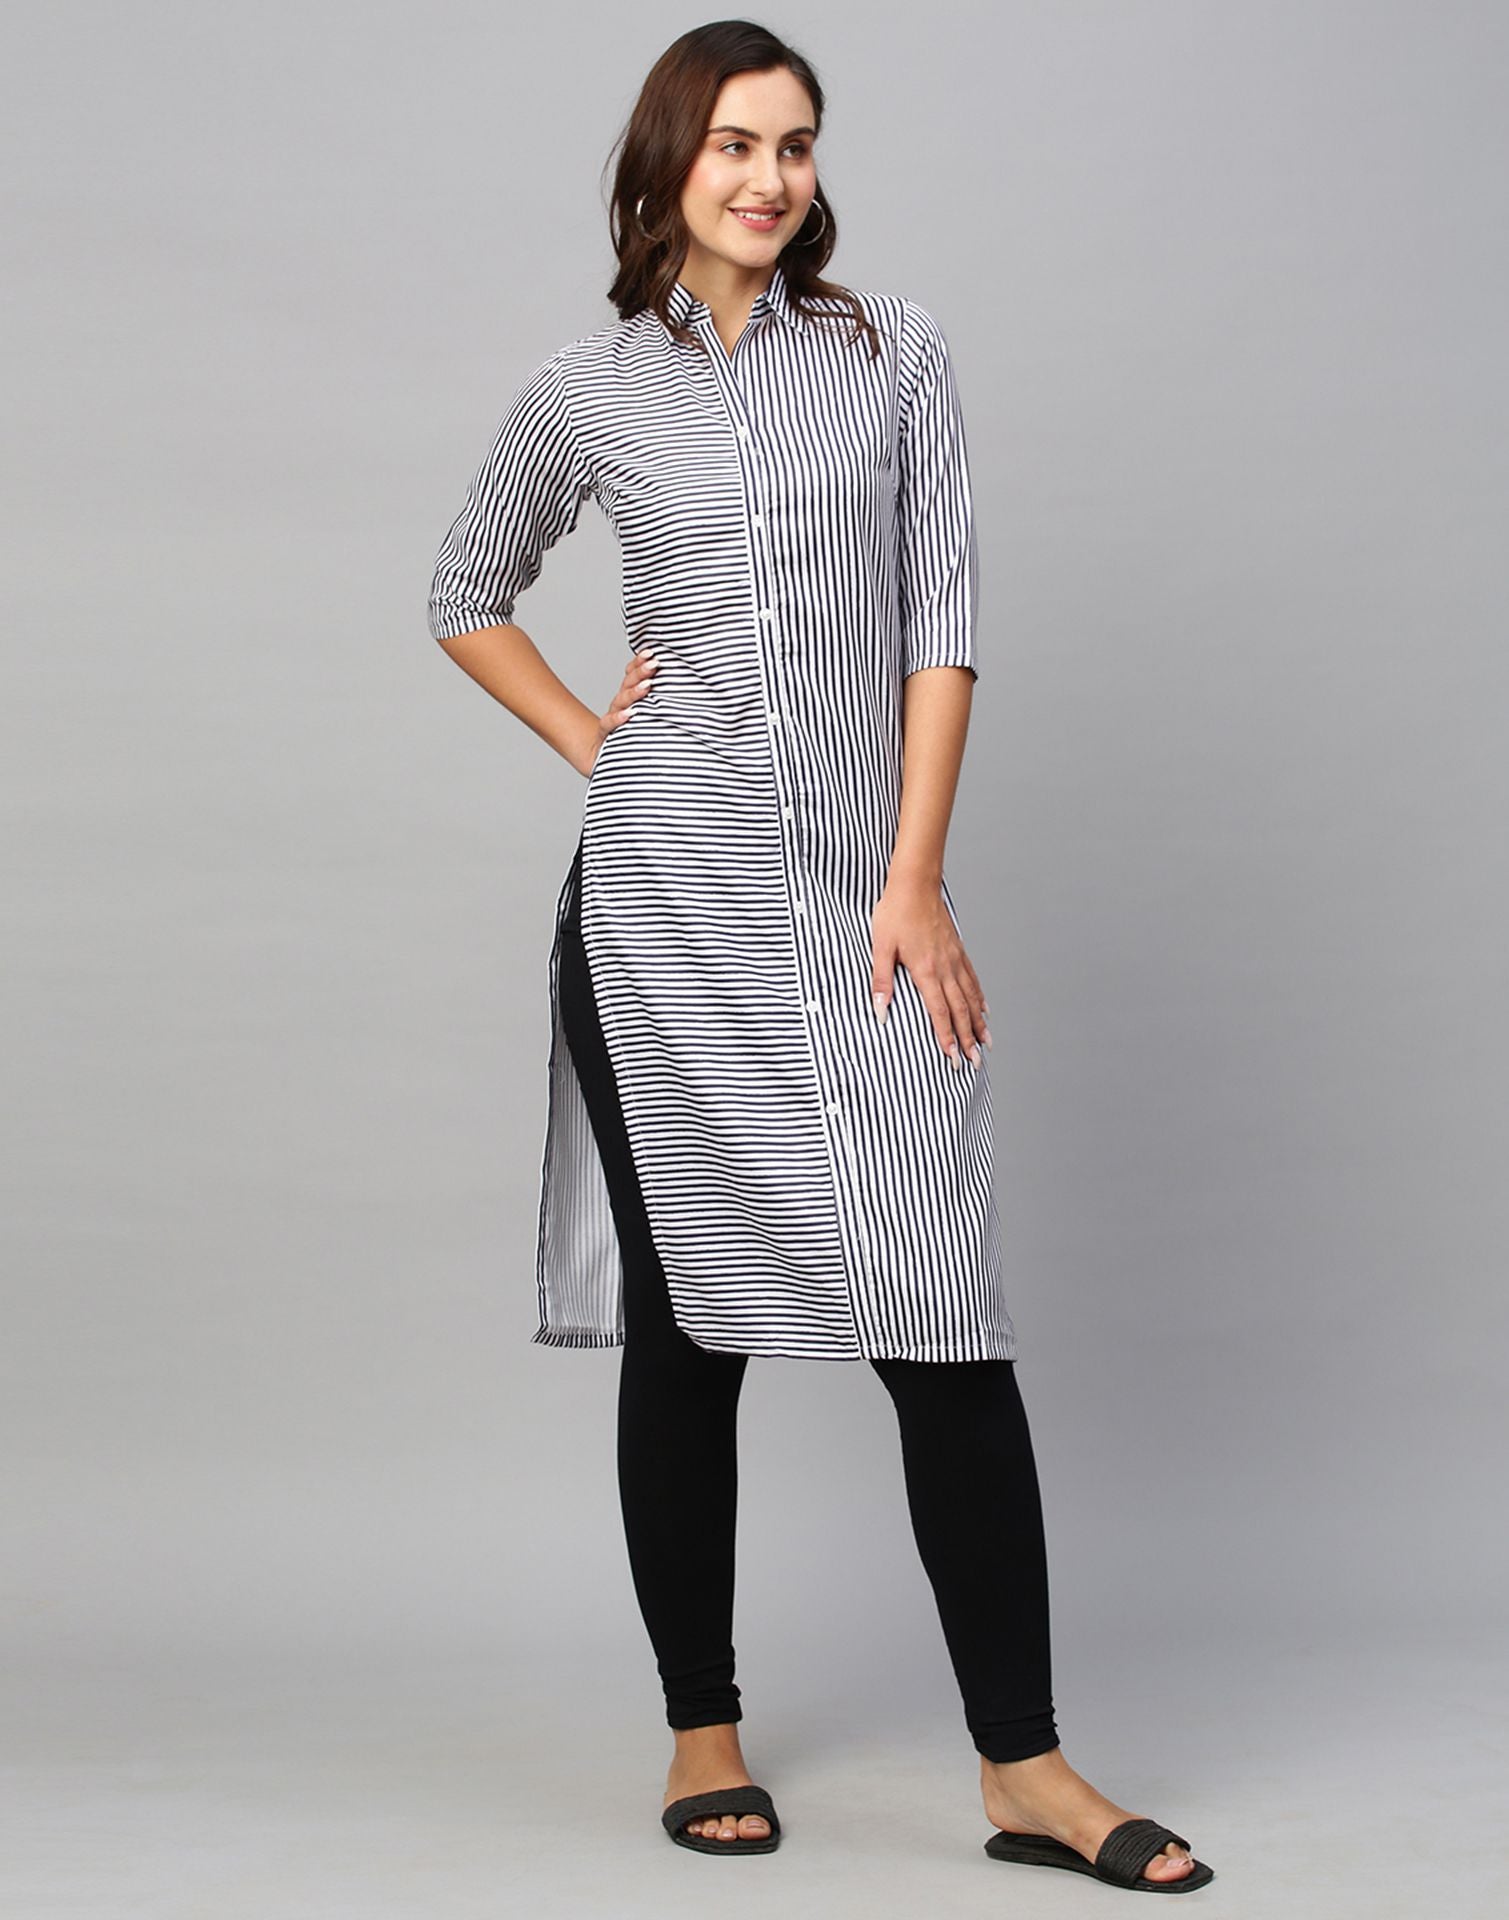 Women Shirt Kurtis - Buy Women Shirt Kurtis online in India